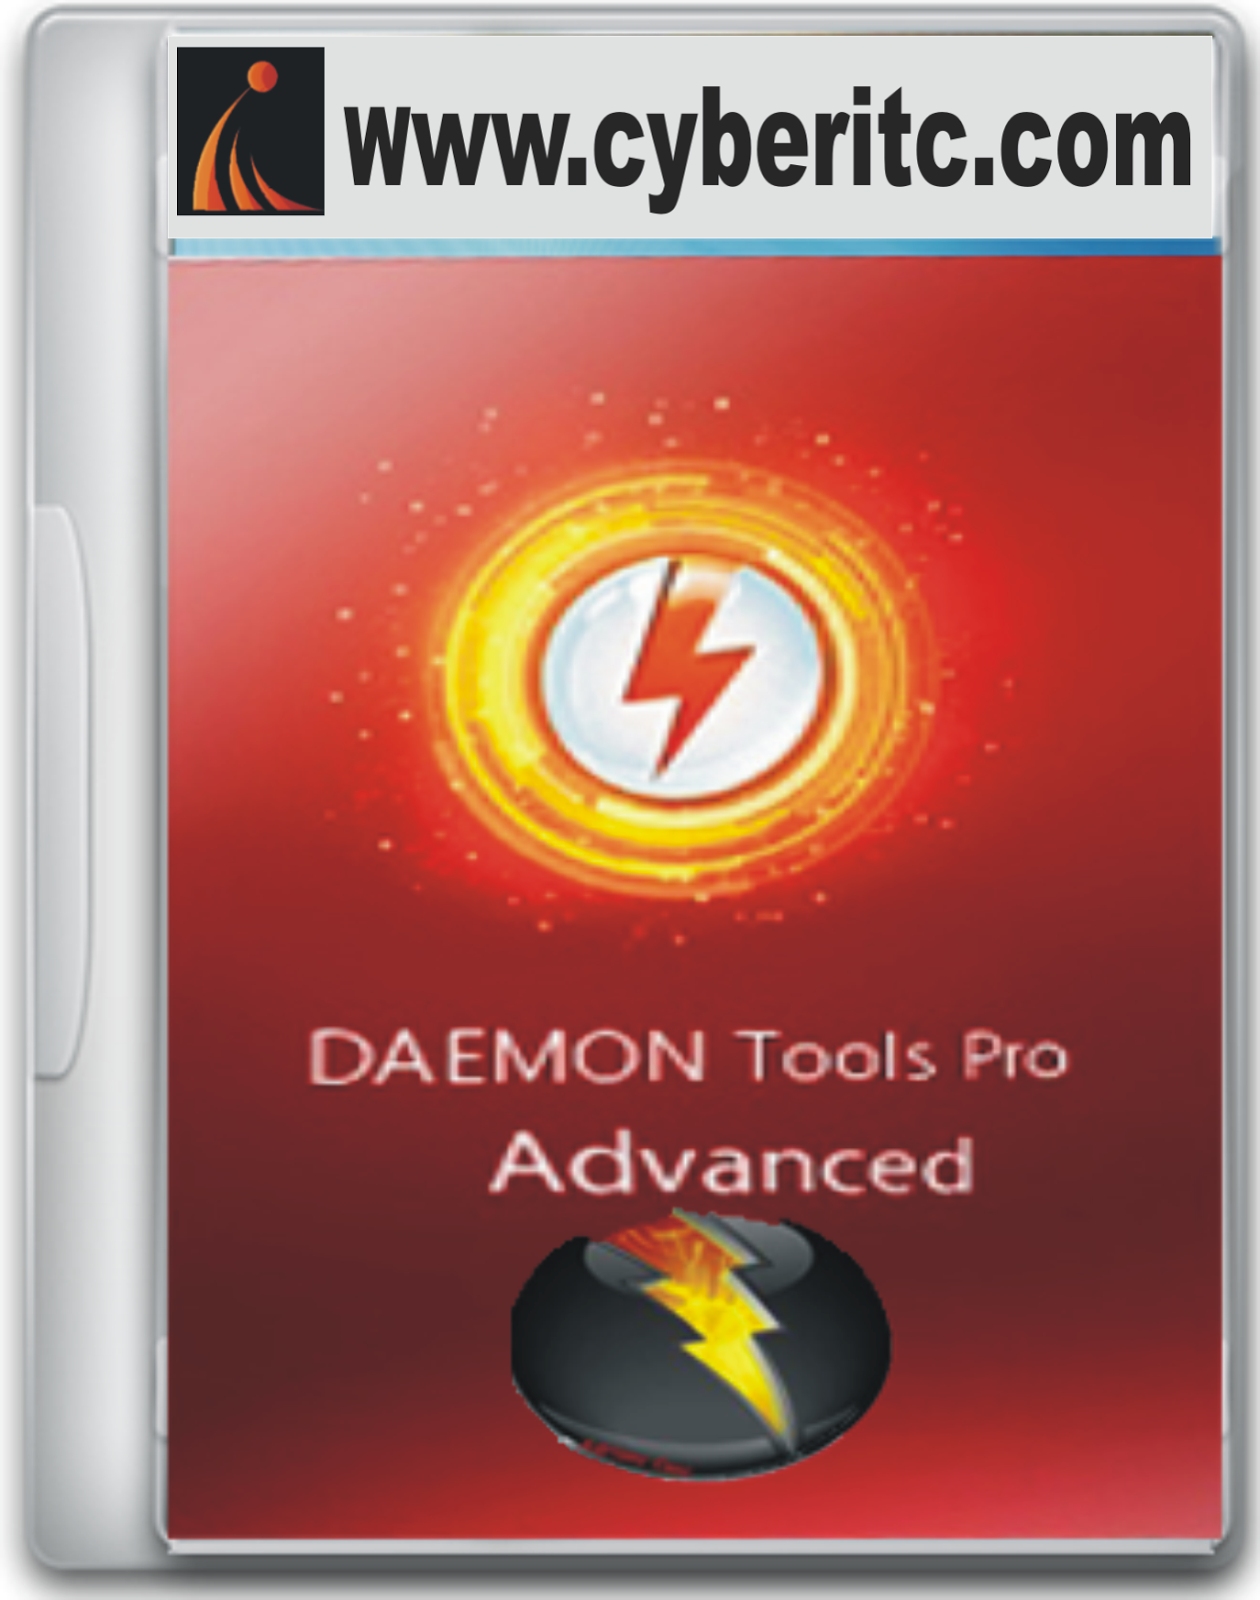 daemon tools pro free download full version